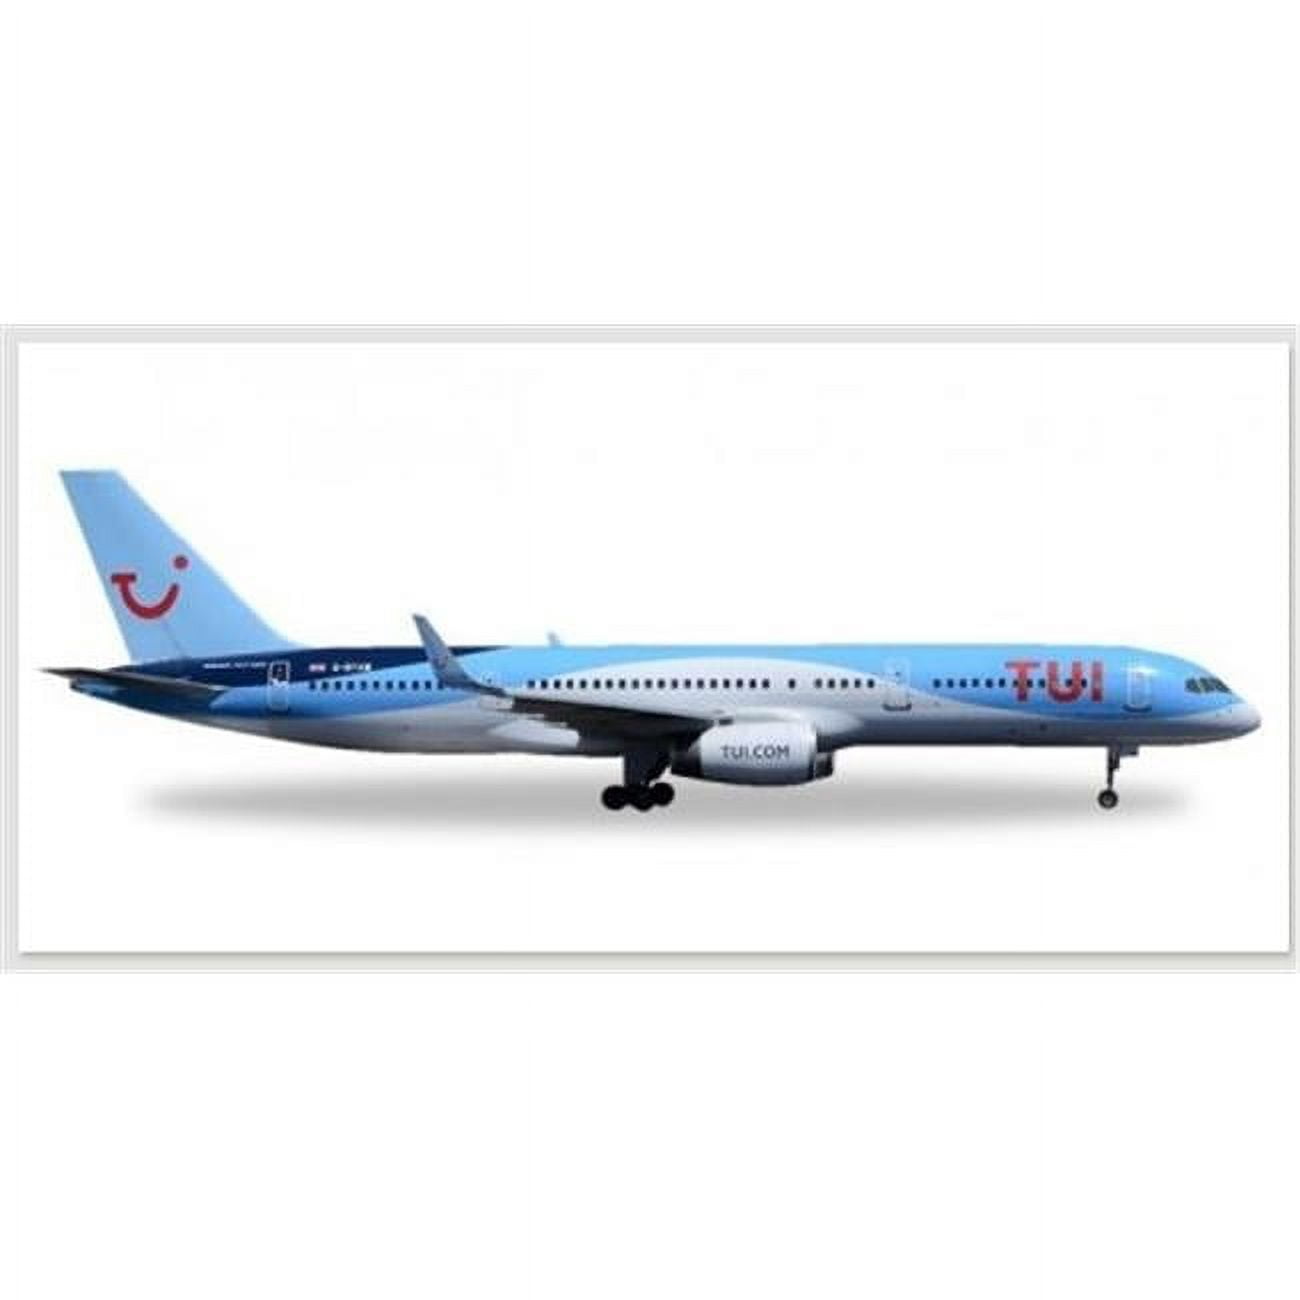 He530903 1 Isto 500 Uk Tui Boeing 757-200 Model Planes